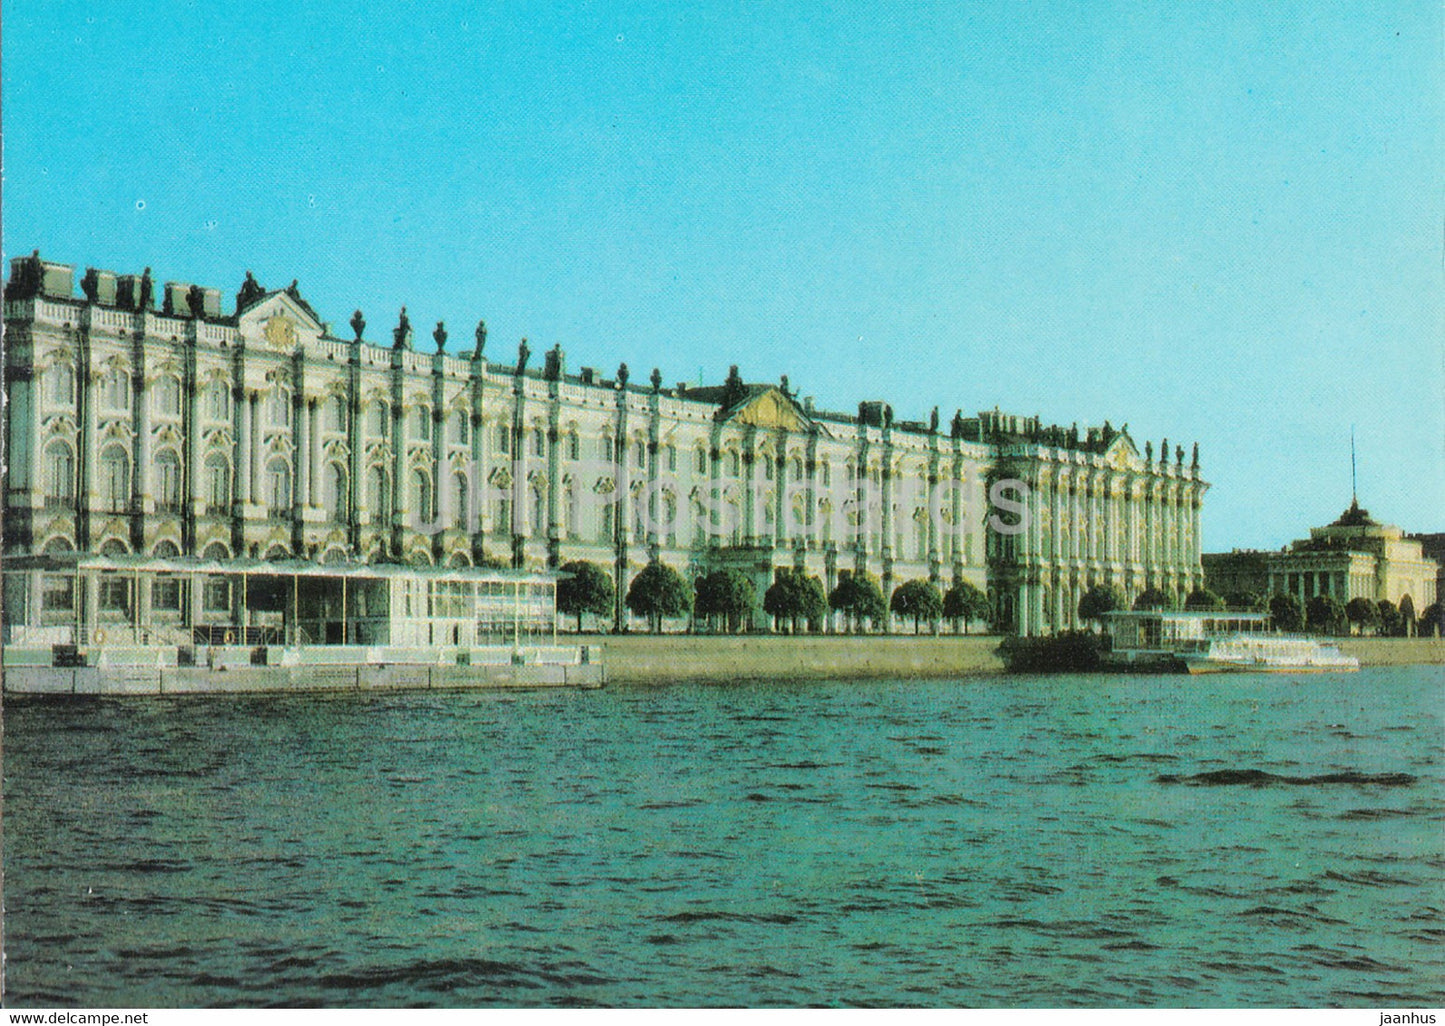 Leningrad - St Petersburg - Winter Palace - State Hermitage Museum - postal stationery - 1990 - Russia USSR - unused - JH Postcards